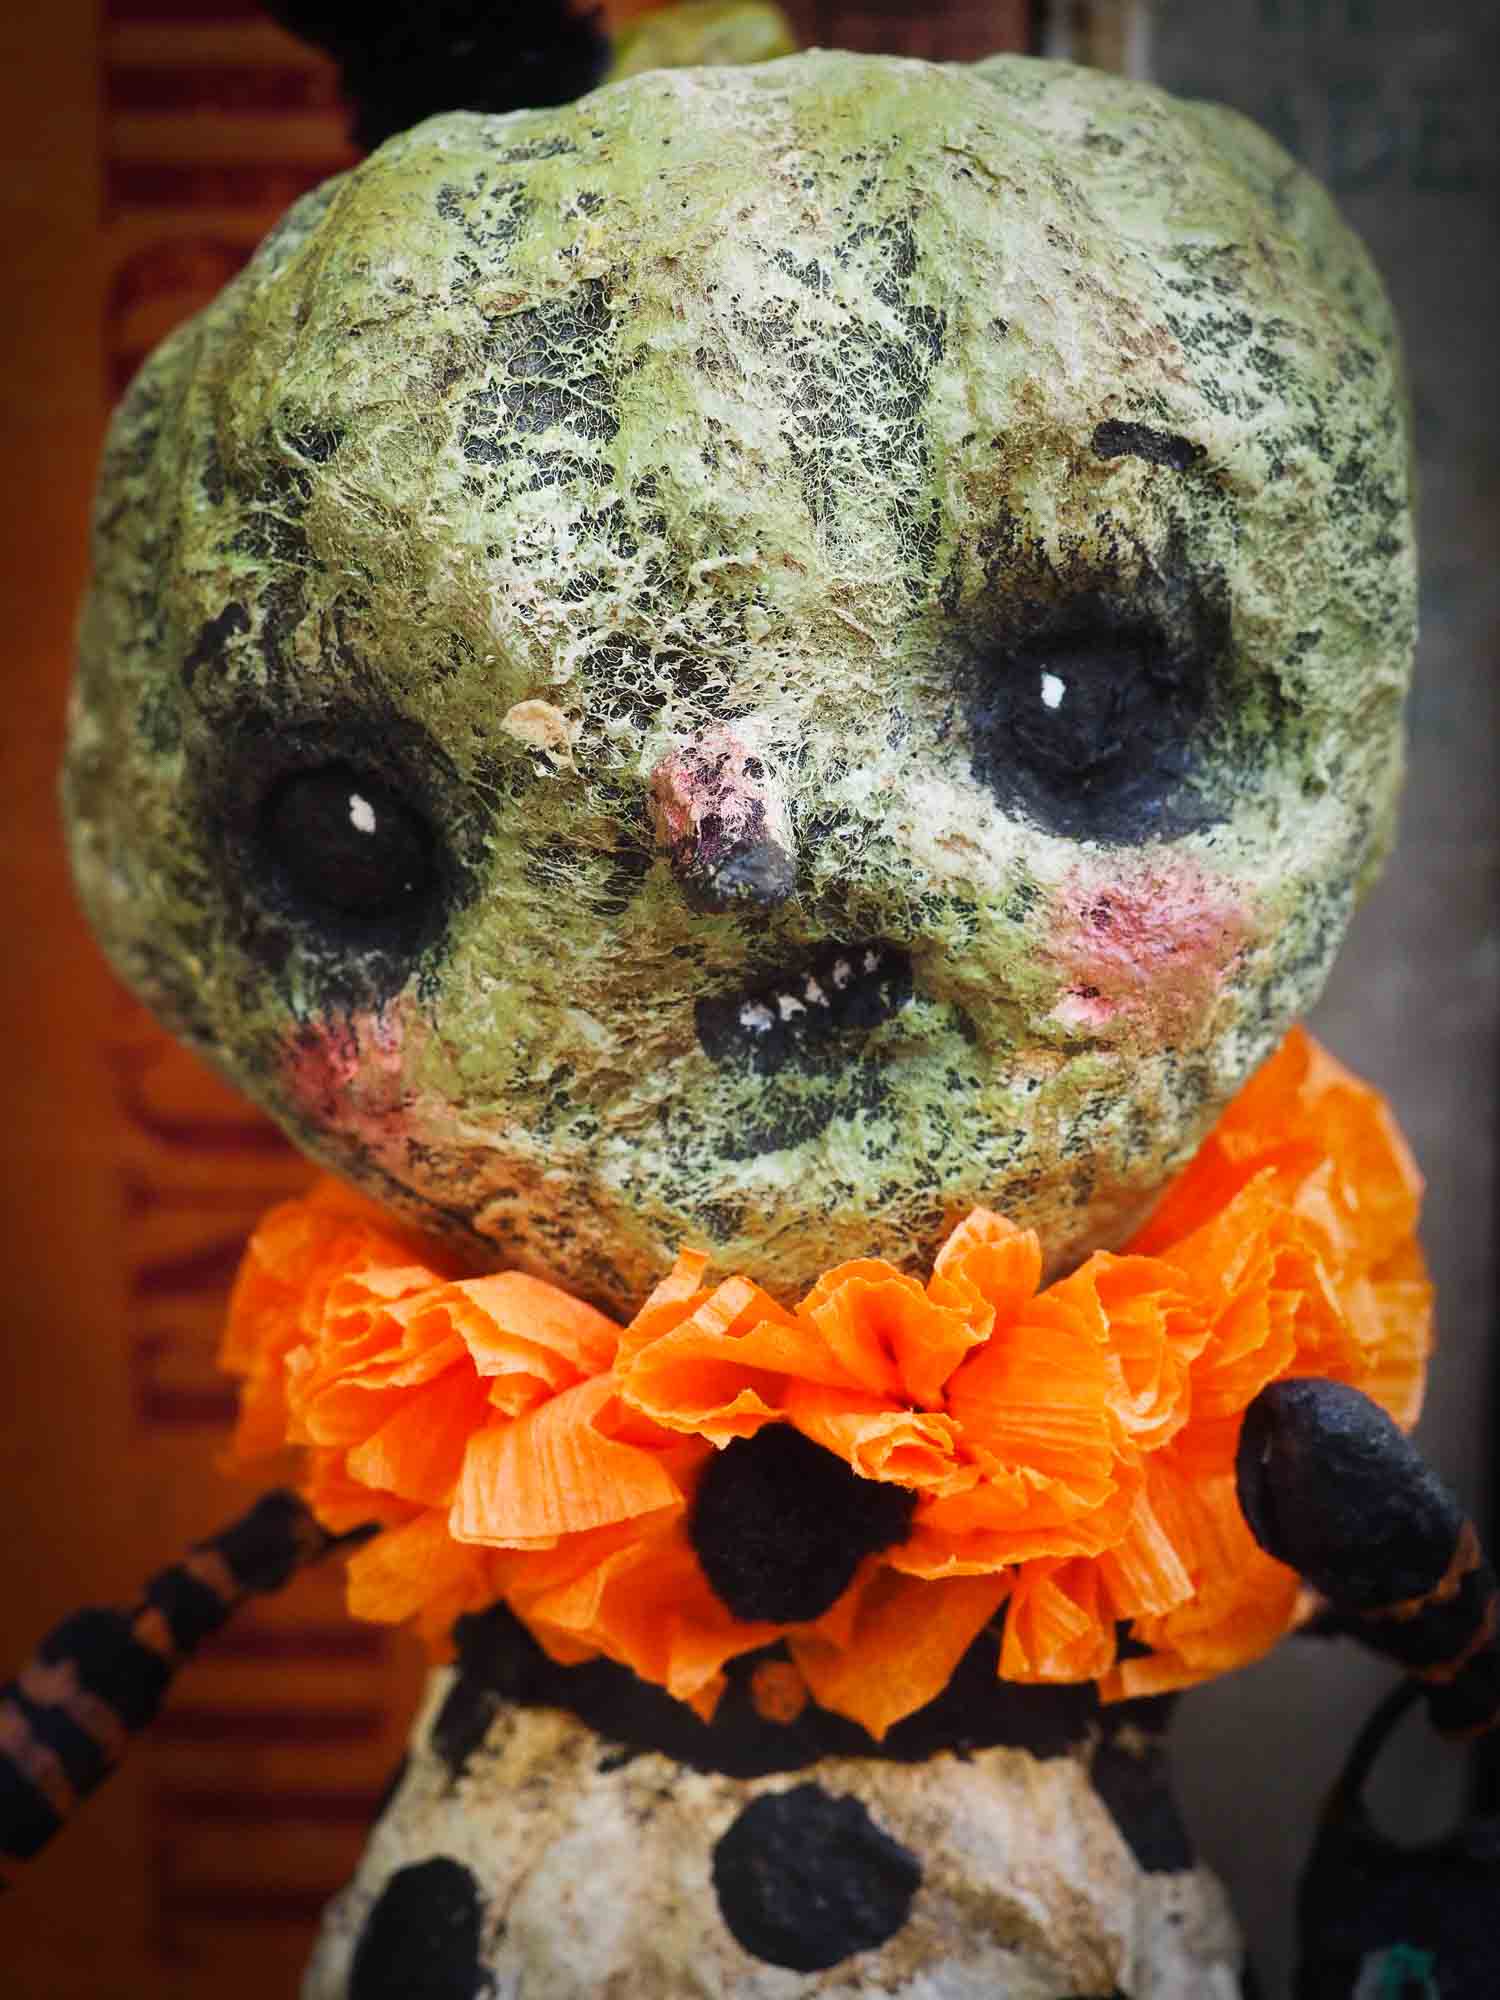 Jack-O-Lantern pumpkin ornament Halloween decoration. Danita art original handmade art doll pumpkin made with spun cotton from collection of witches, ghosts, skeletons, jack-o-lantern, pumpkin, vampire, ghouls and other whimsical folk art style home decor.